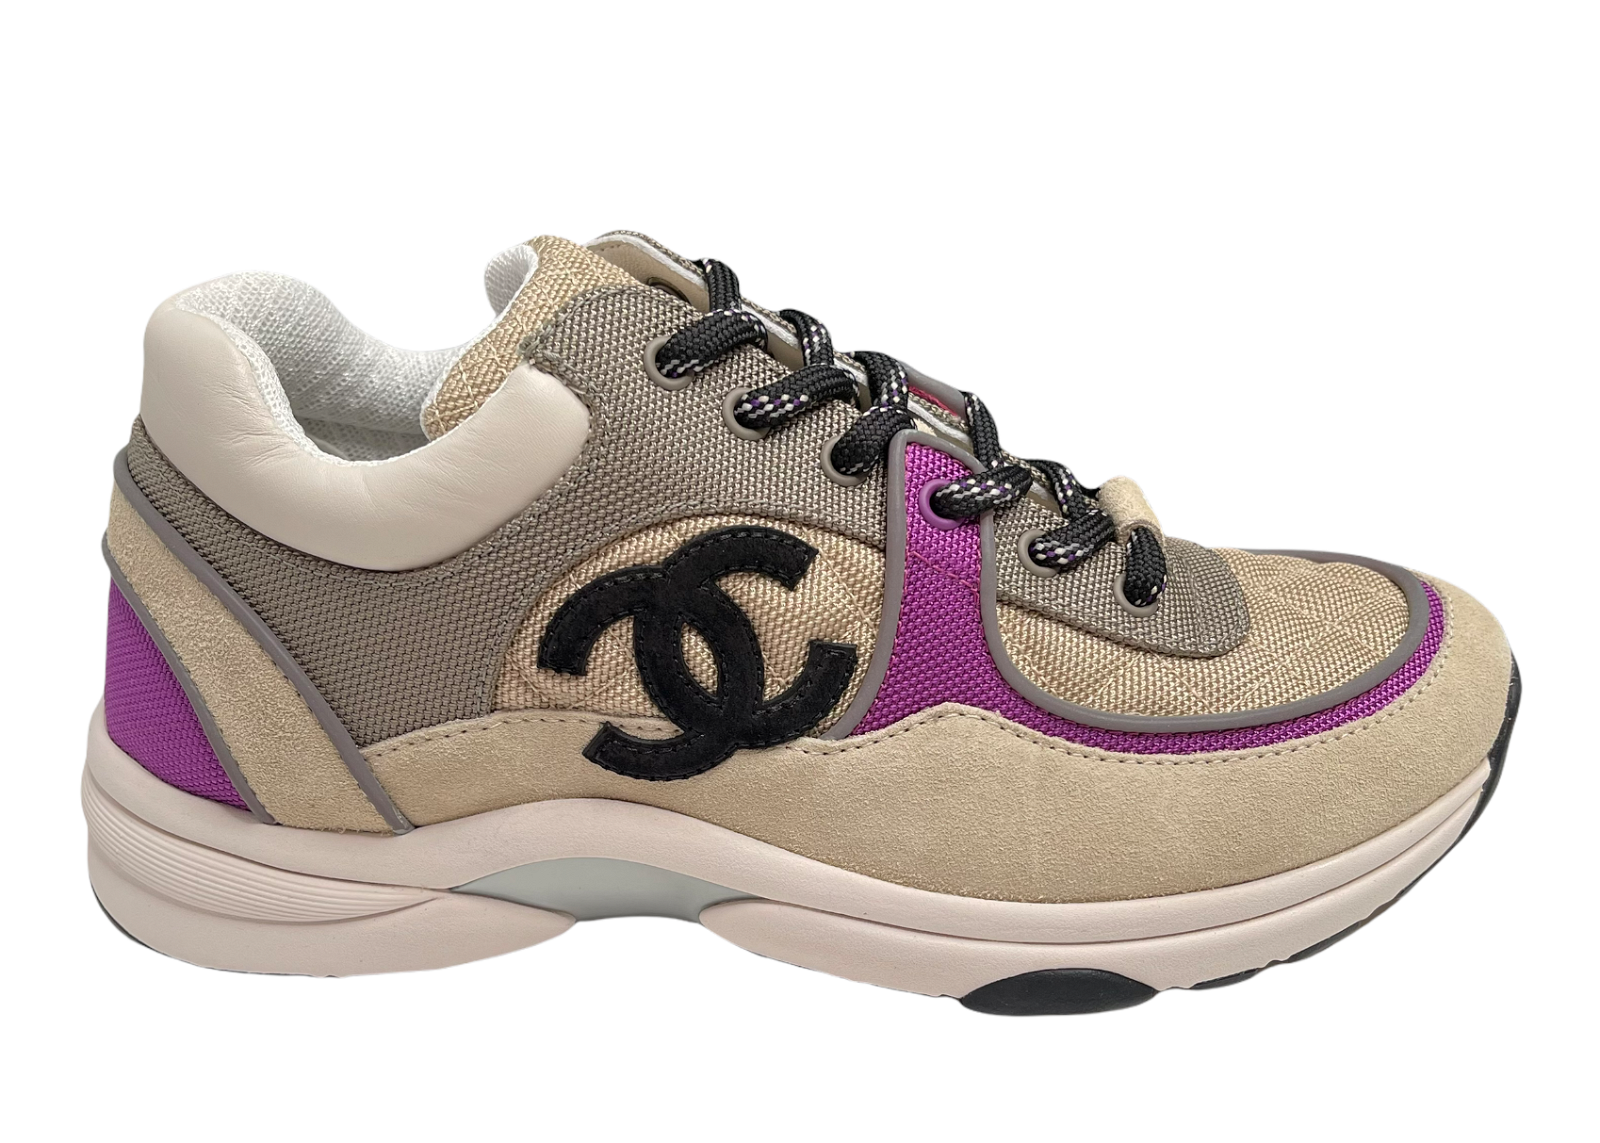 Chanel Low Top Trainer Beige Purple sneakers